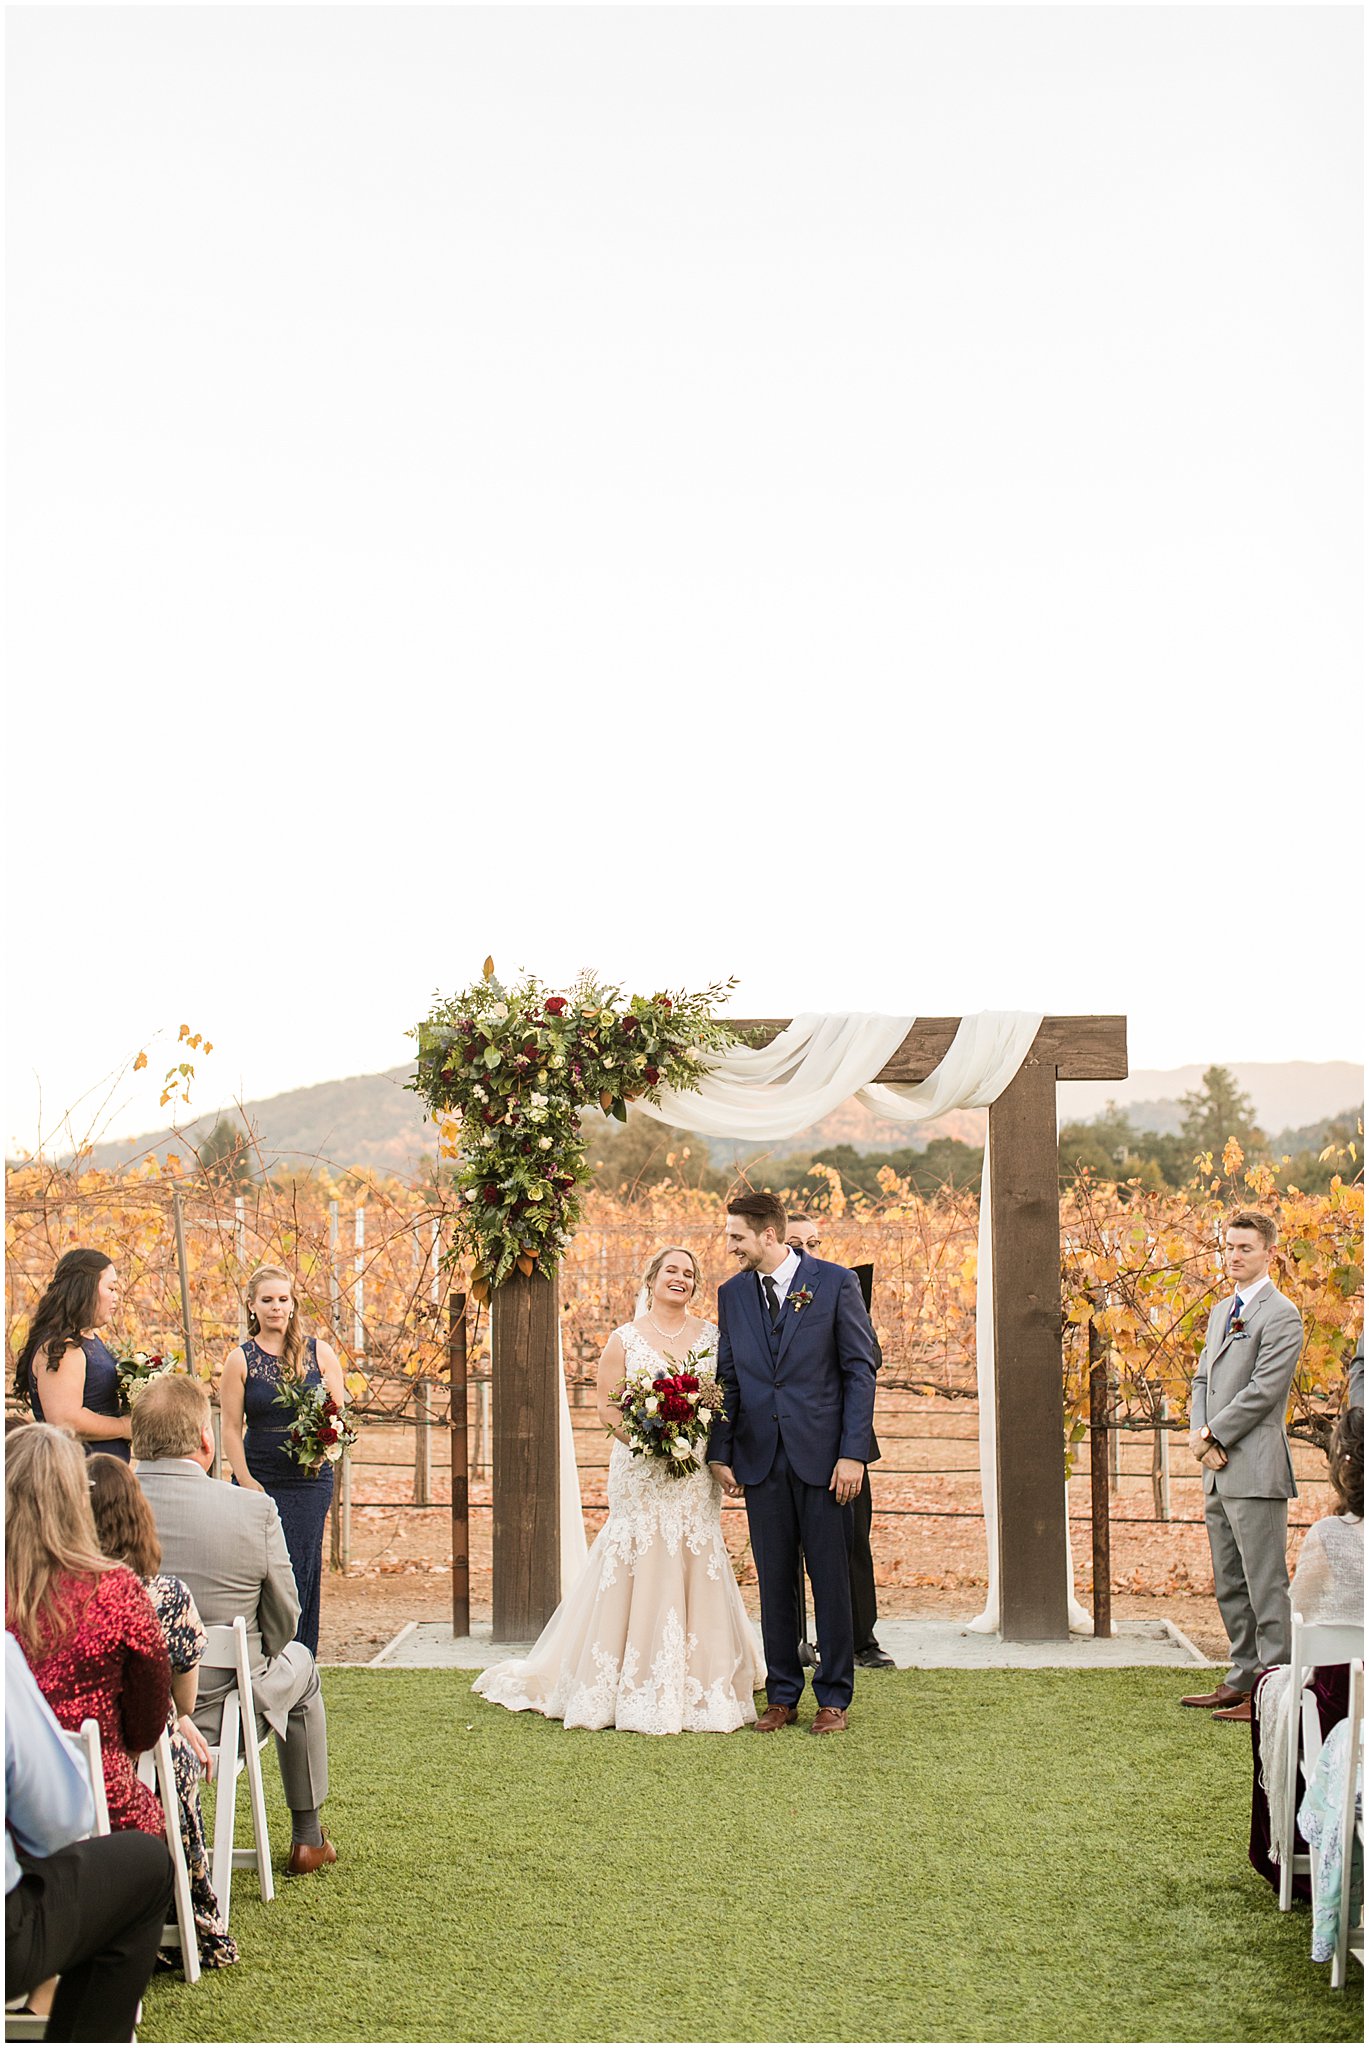 Sycamore Creek Vineyards Wedding - Live Love Leal - Fall Wedding - Bay Area Wedding Photographer - Angela Sue Photography_0089.jpg